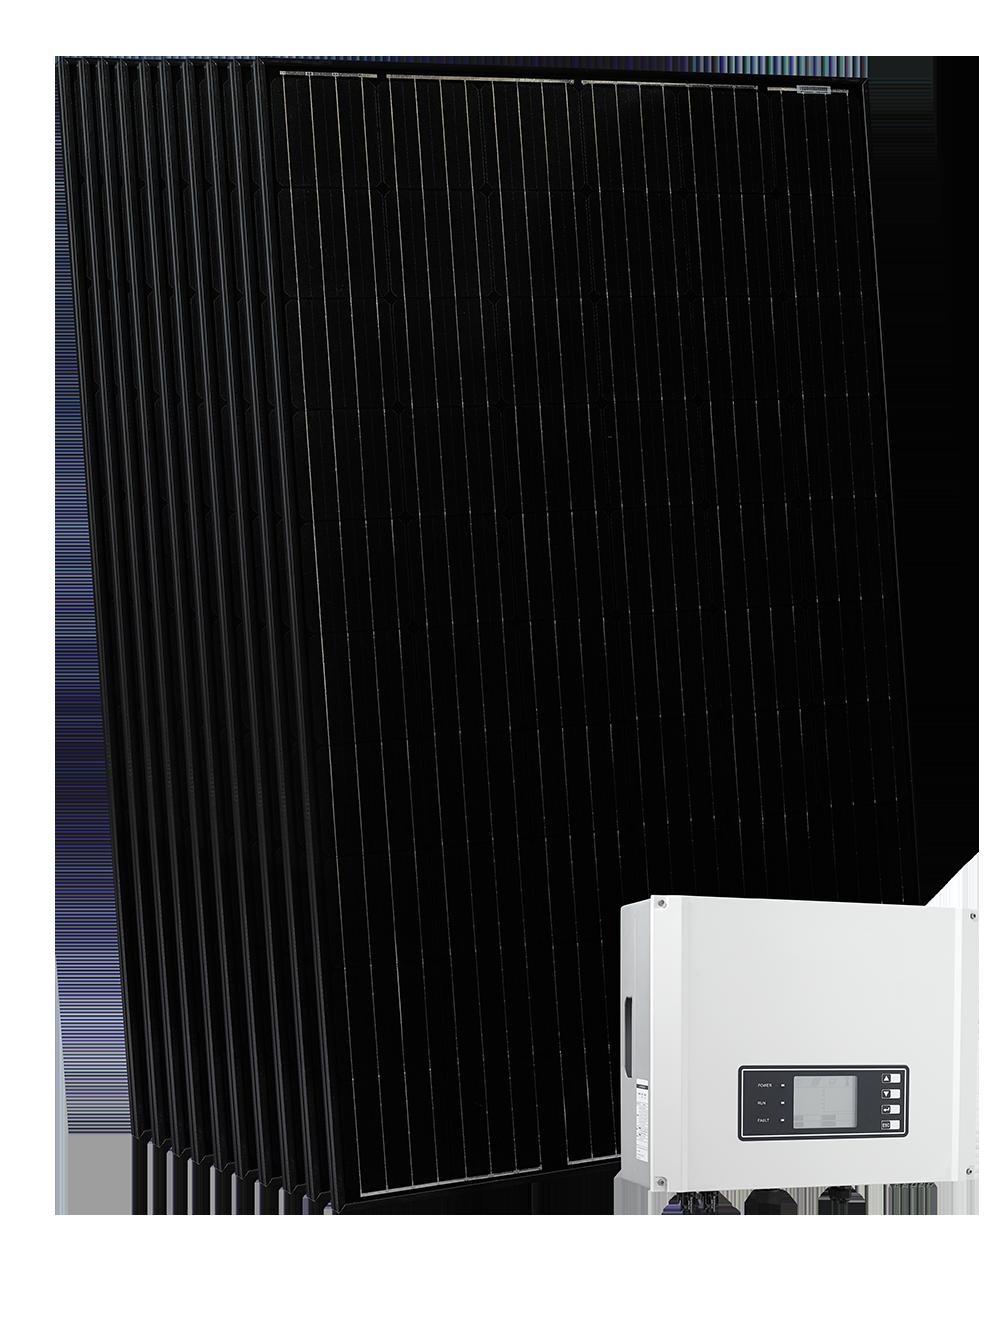 Solcellspaketen kan enkelt kompletteras med fler solpaneler för en optimal takanpassning. NIBE PV består av monokristallina kiselcellspaneler av PERC-teknik med en effekt av 295 Wp.